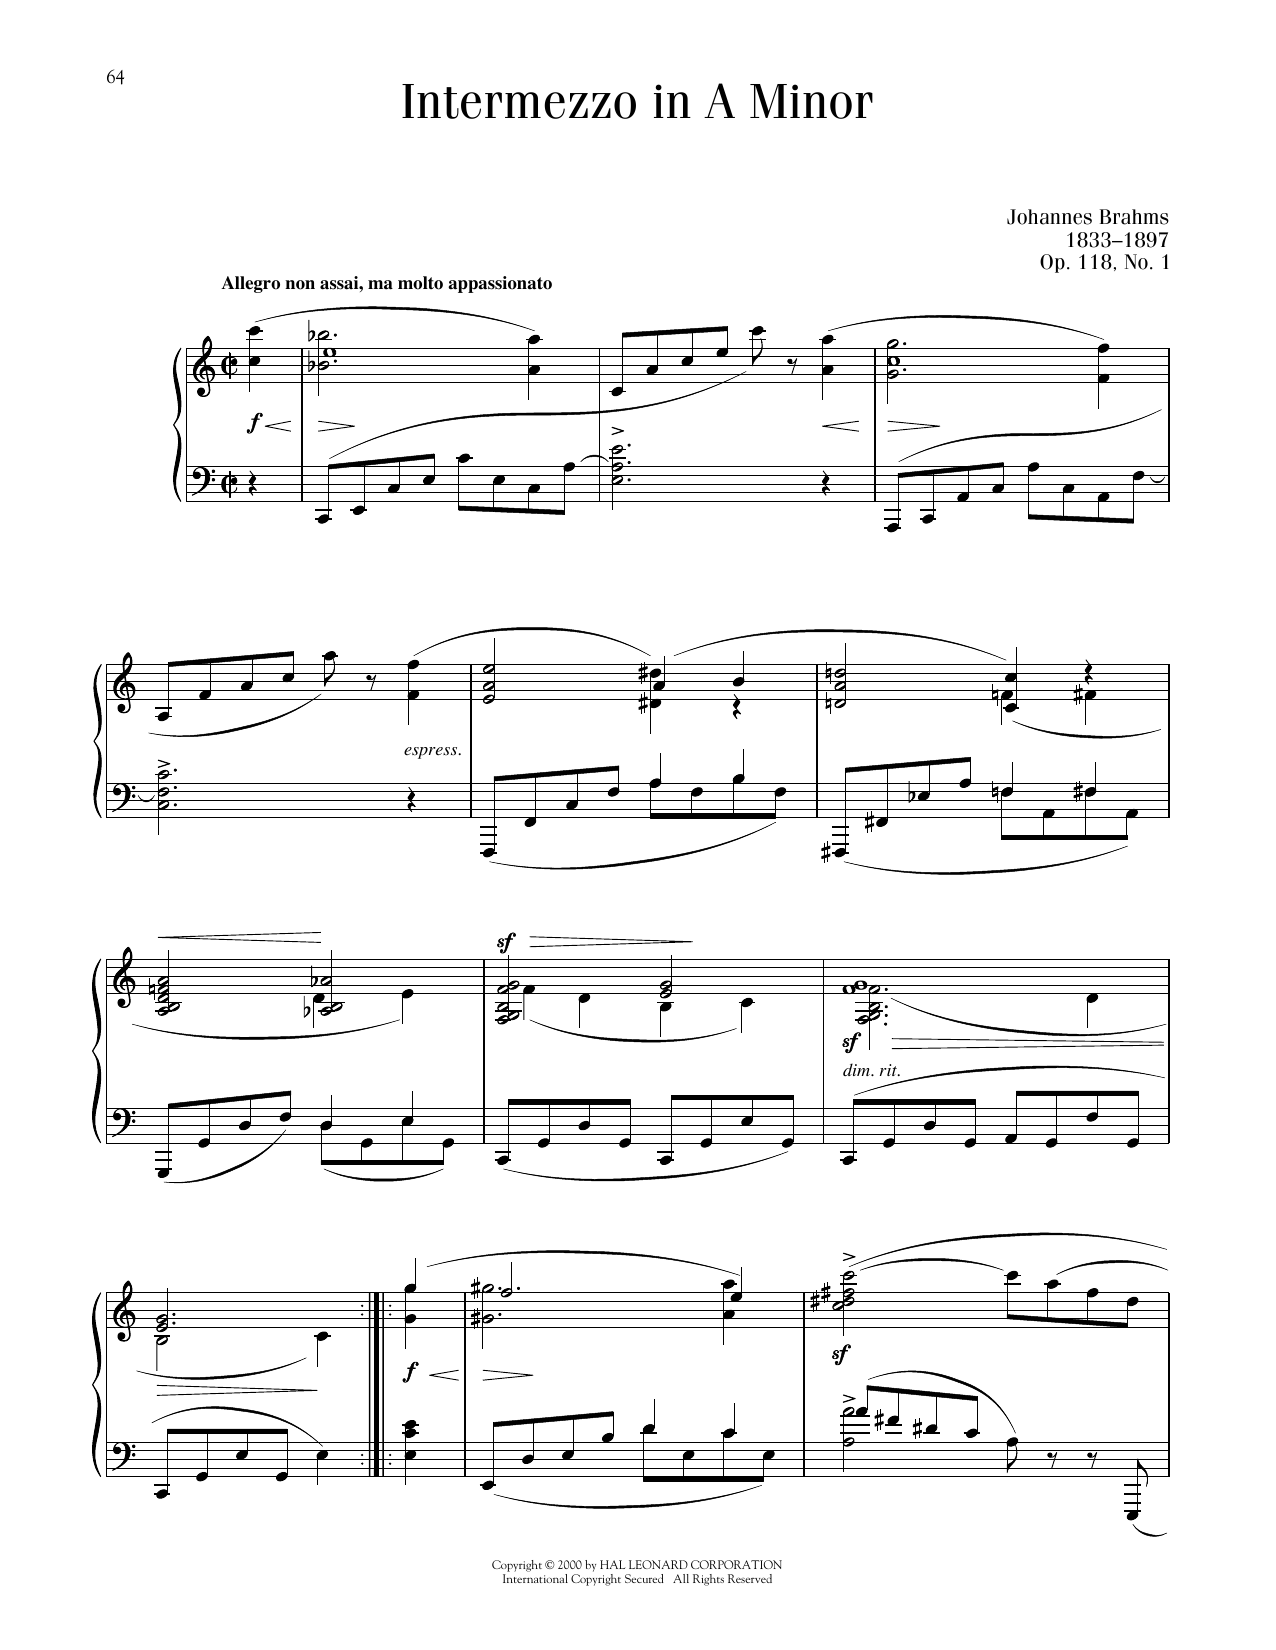 Johannes Brahms Intermezzo In A Minor, Op. 118, No. 1 sheet music notes printable PDF score